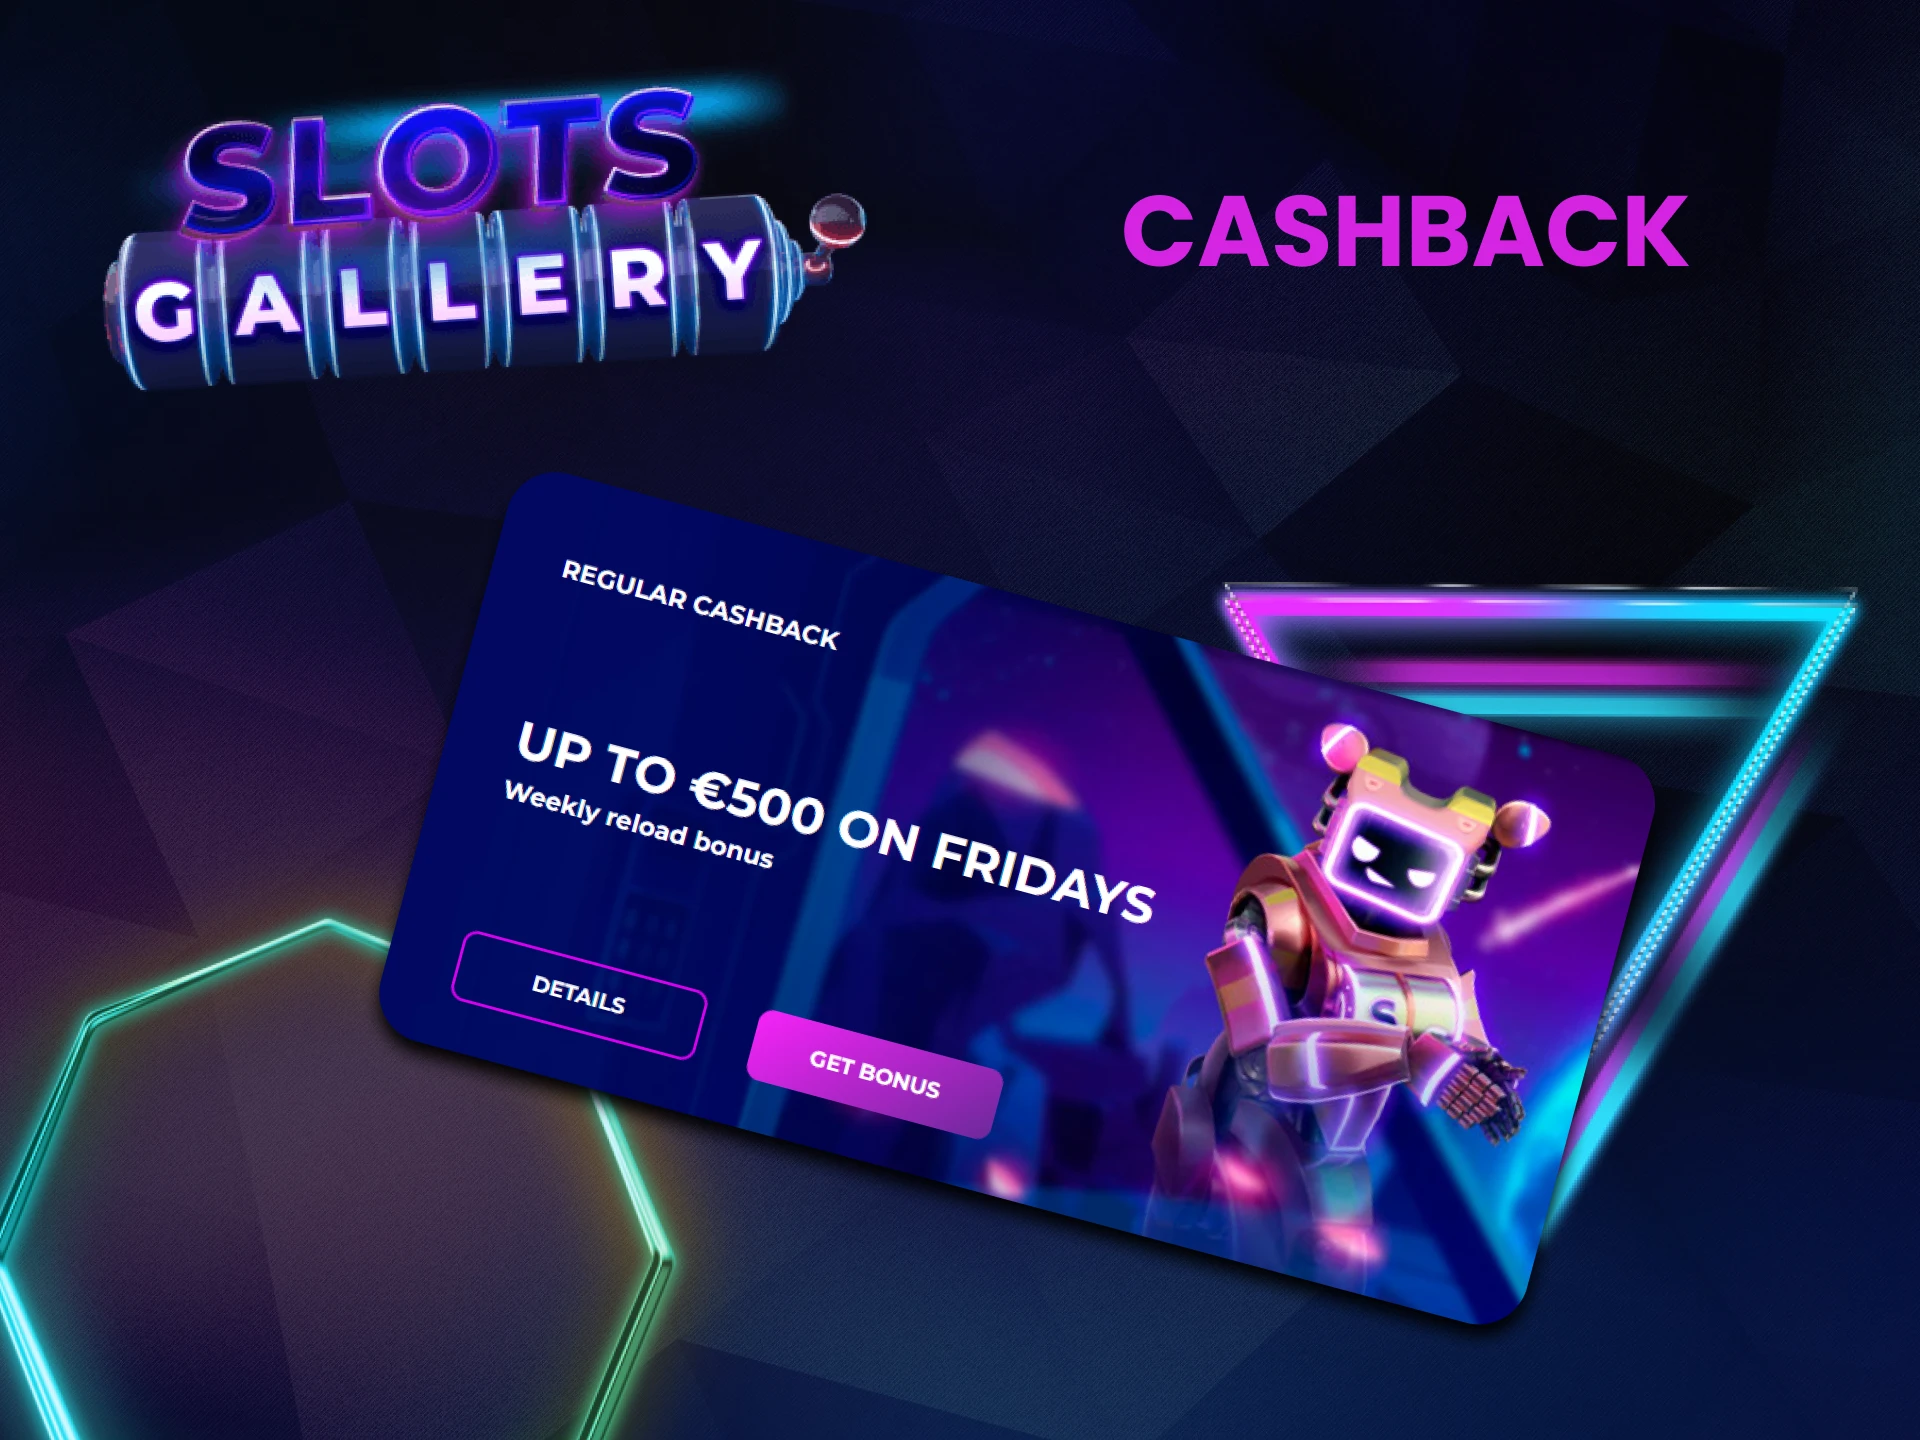 Get a cashback bonus from Slots Gallery.